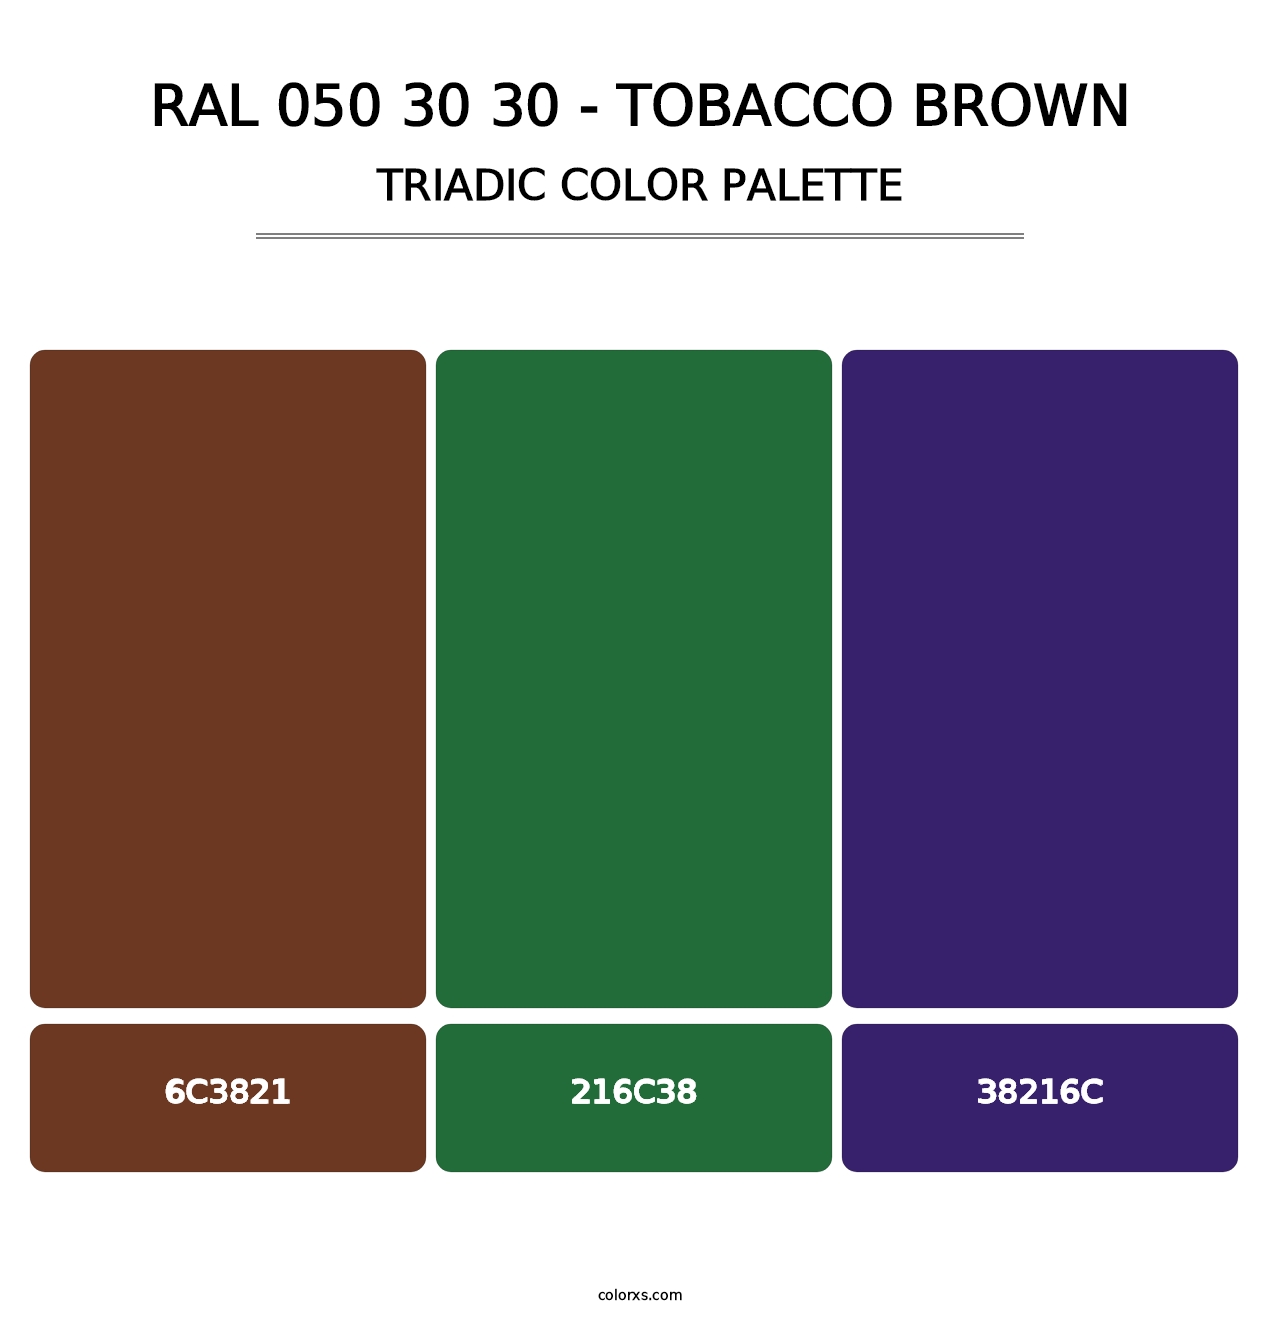 RAL 050 30 30 - Tobacco Brown - Triadic Color Palette